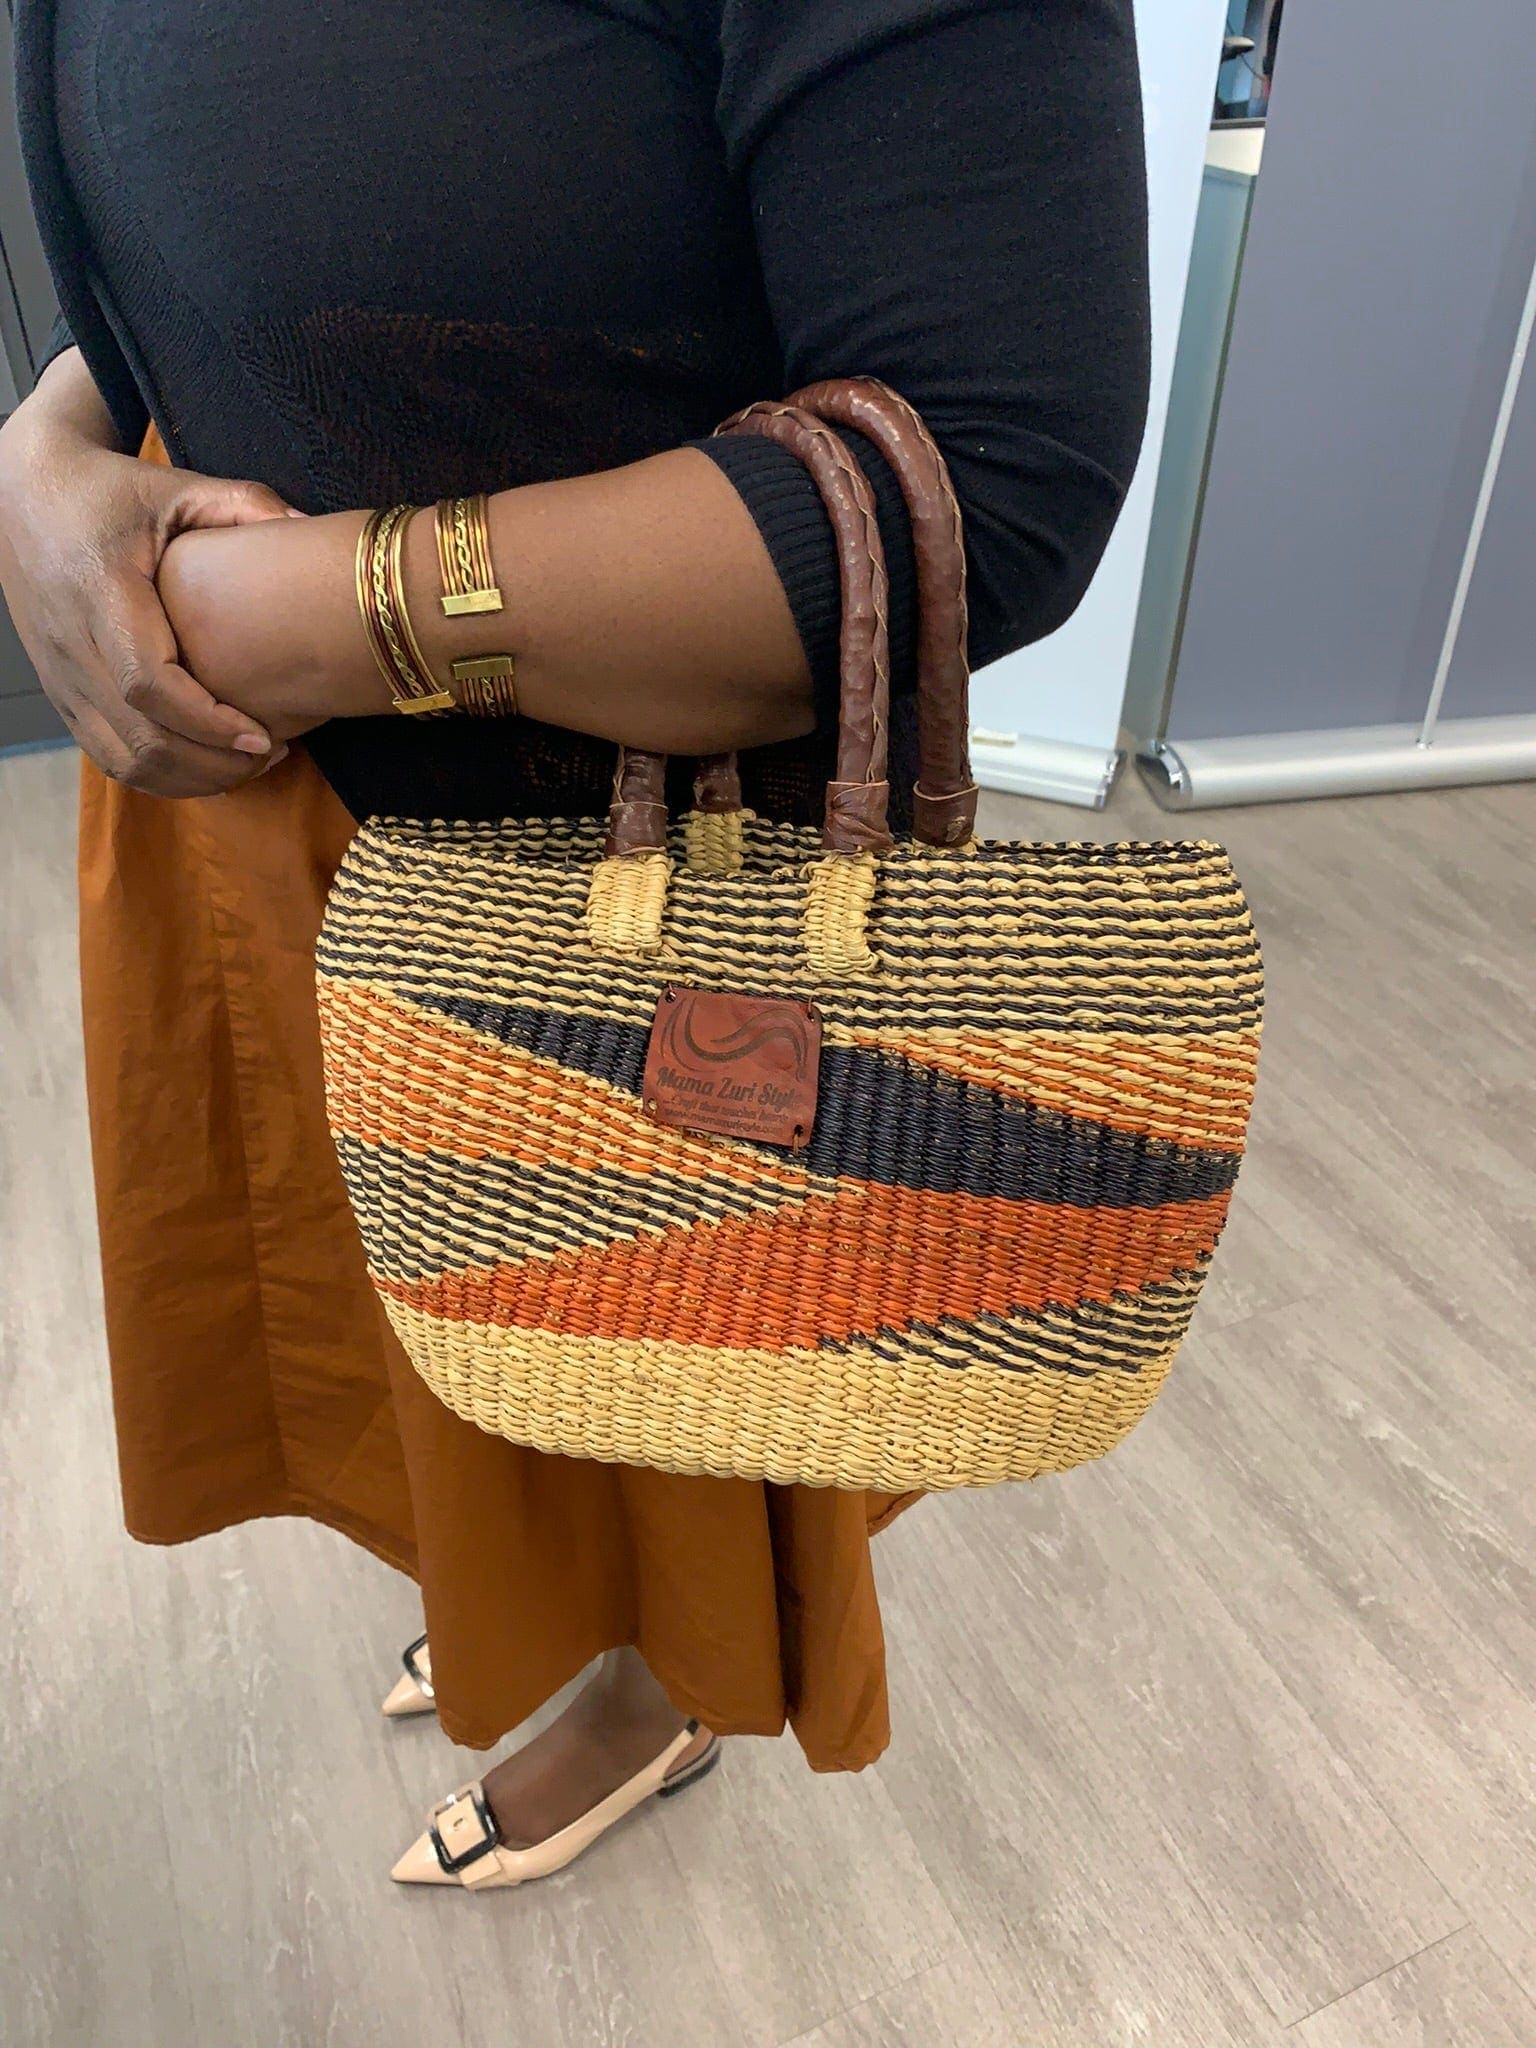 Mama Zuri Style Girlfriend gift idea basket bag